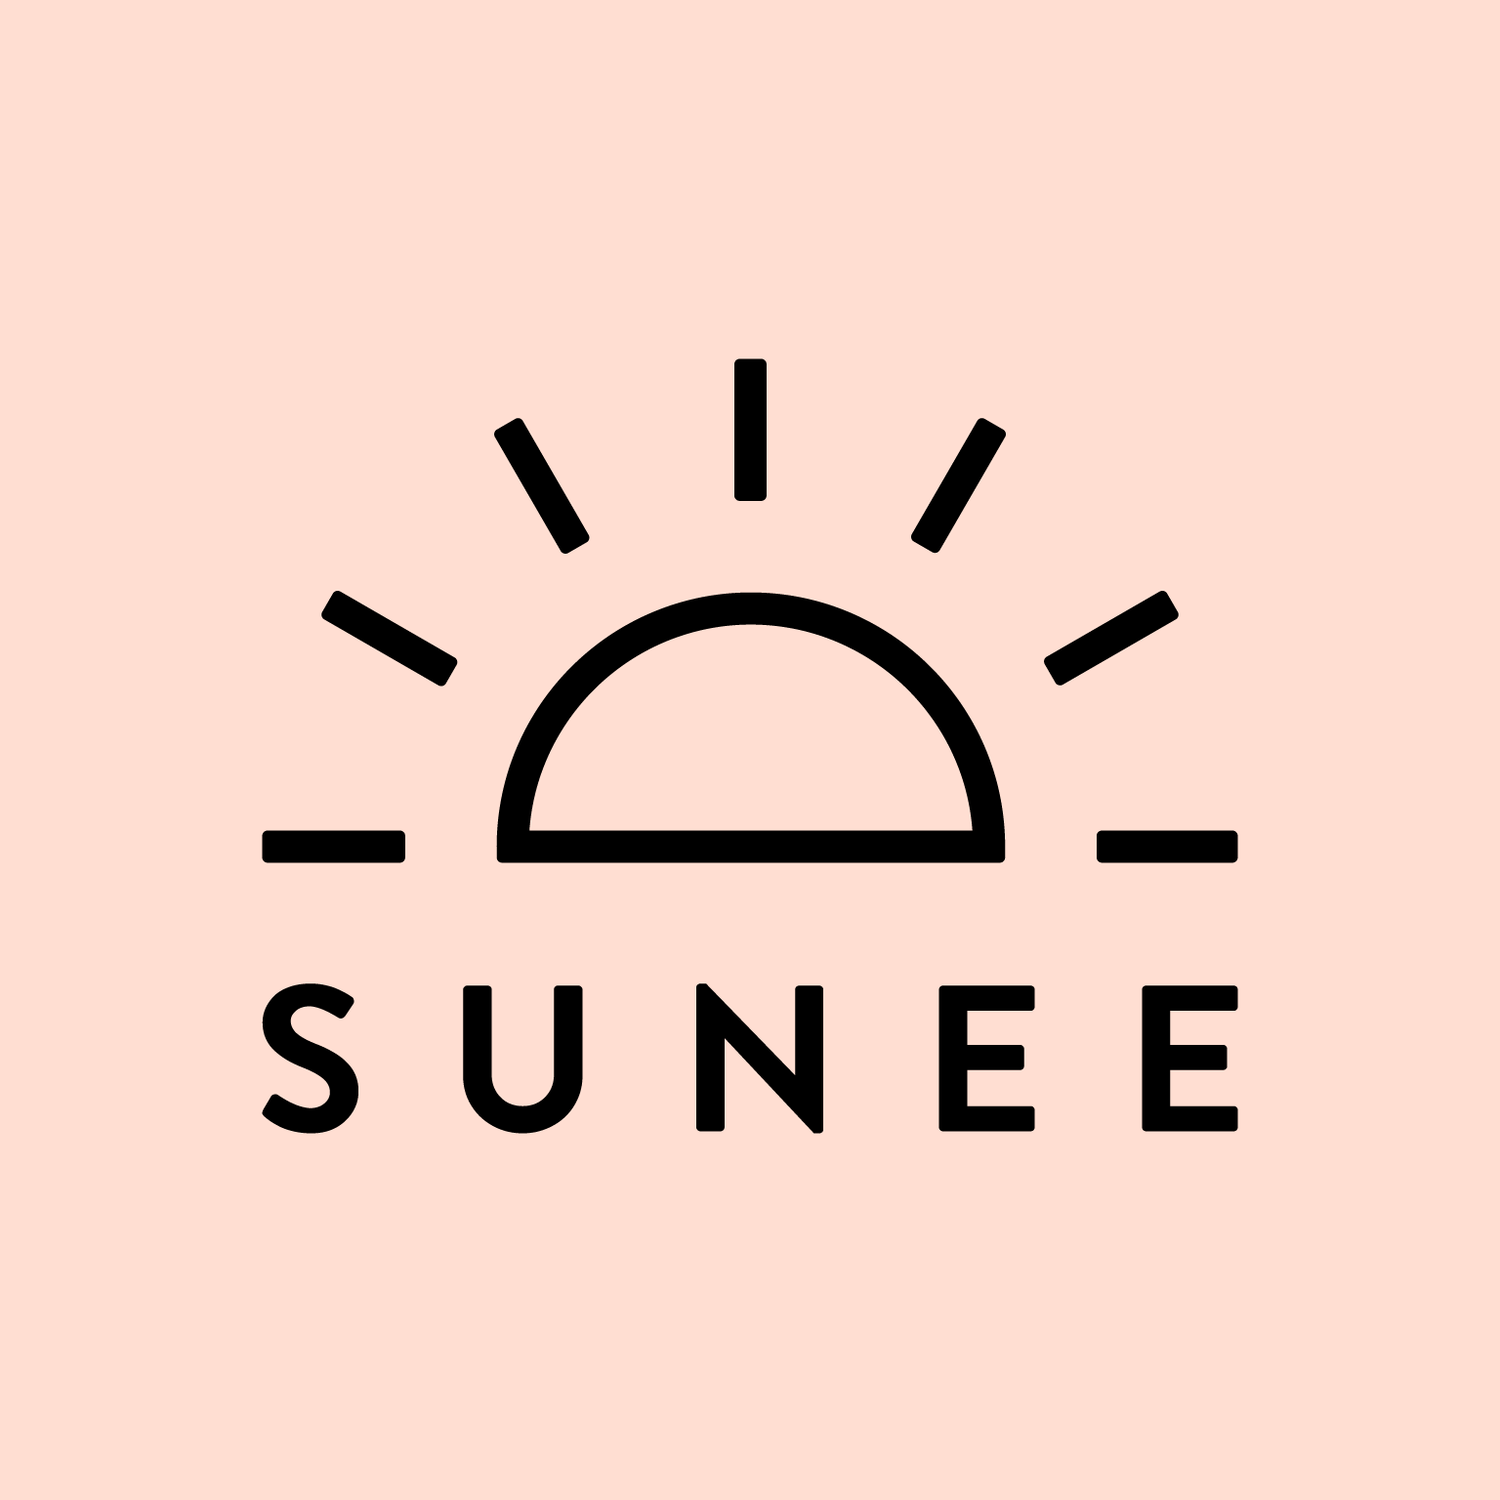 www.sunee.com